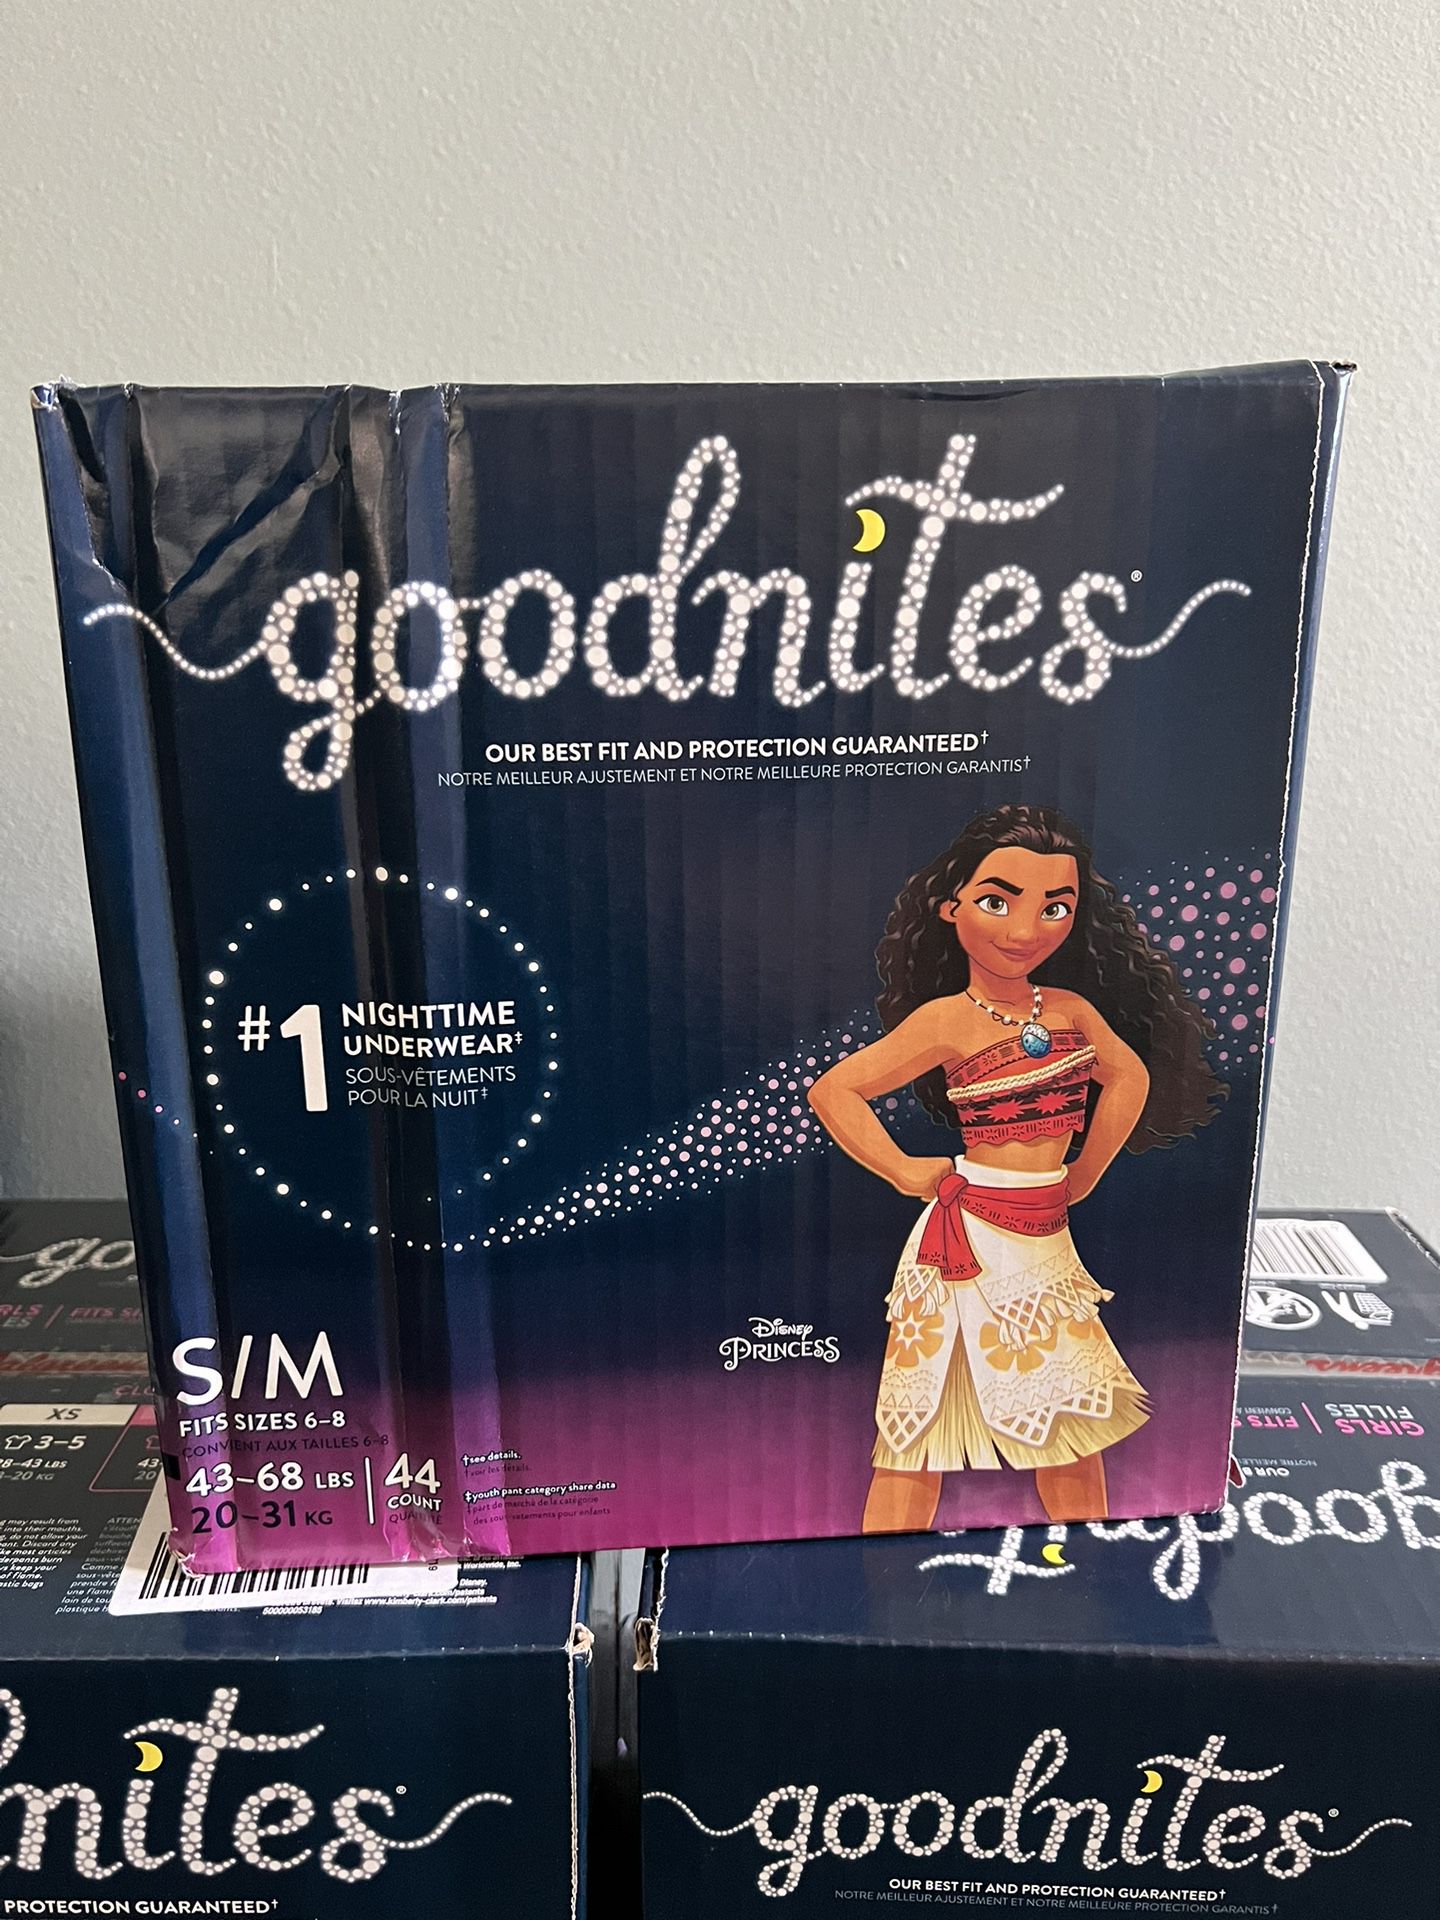 Goodnites / Underwear / Diapers 